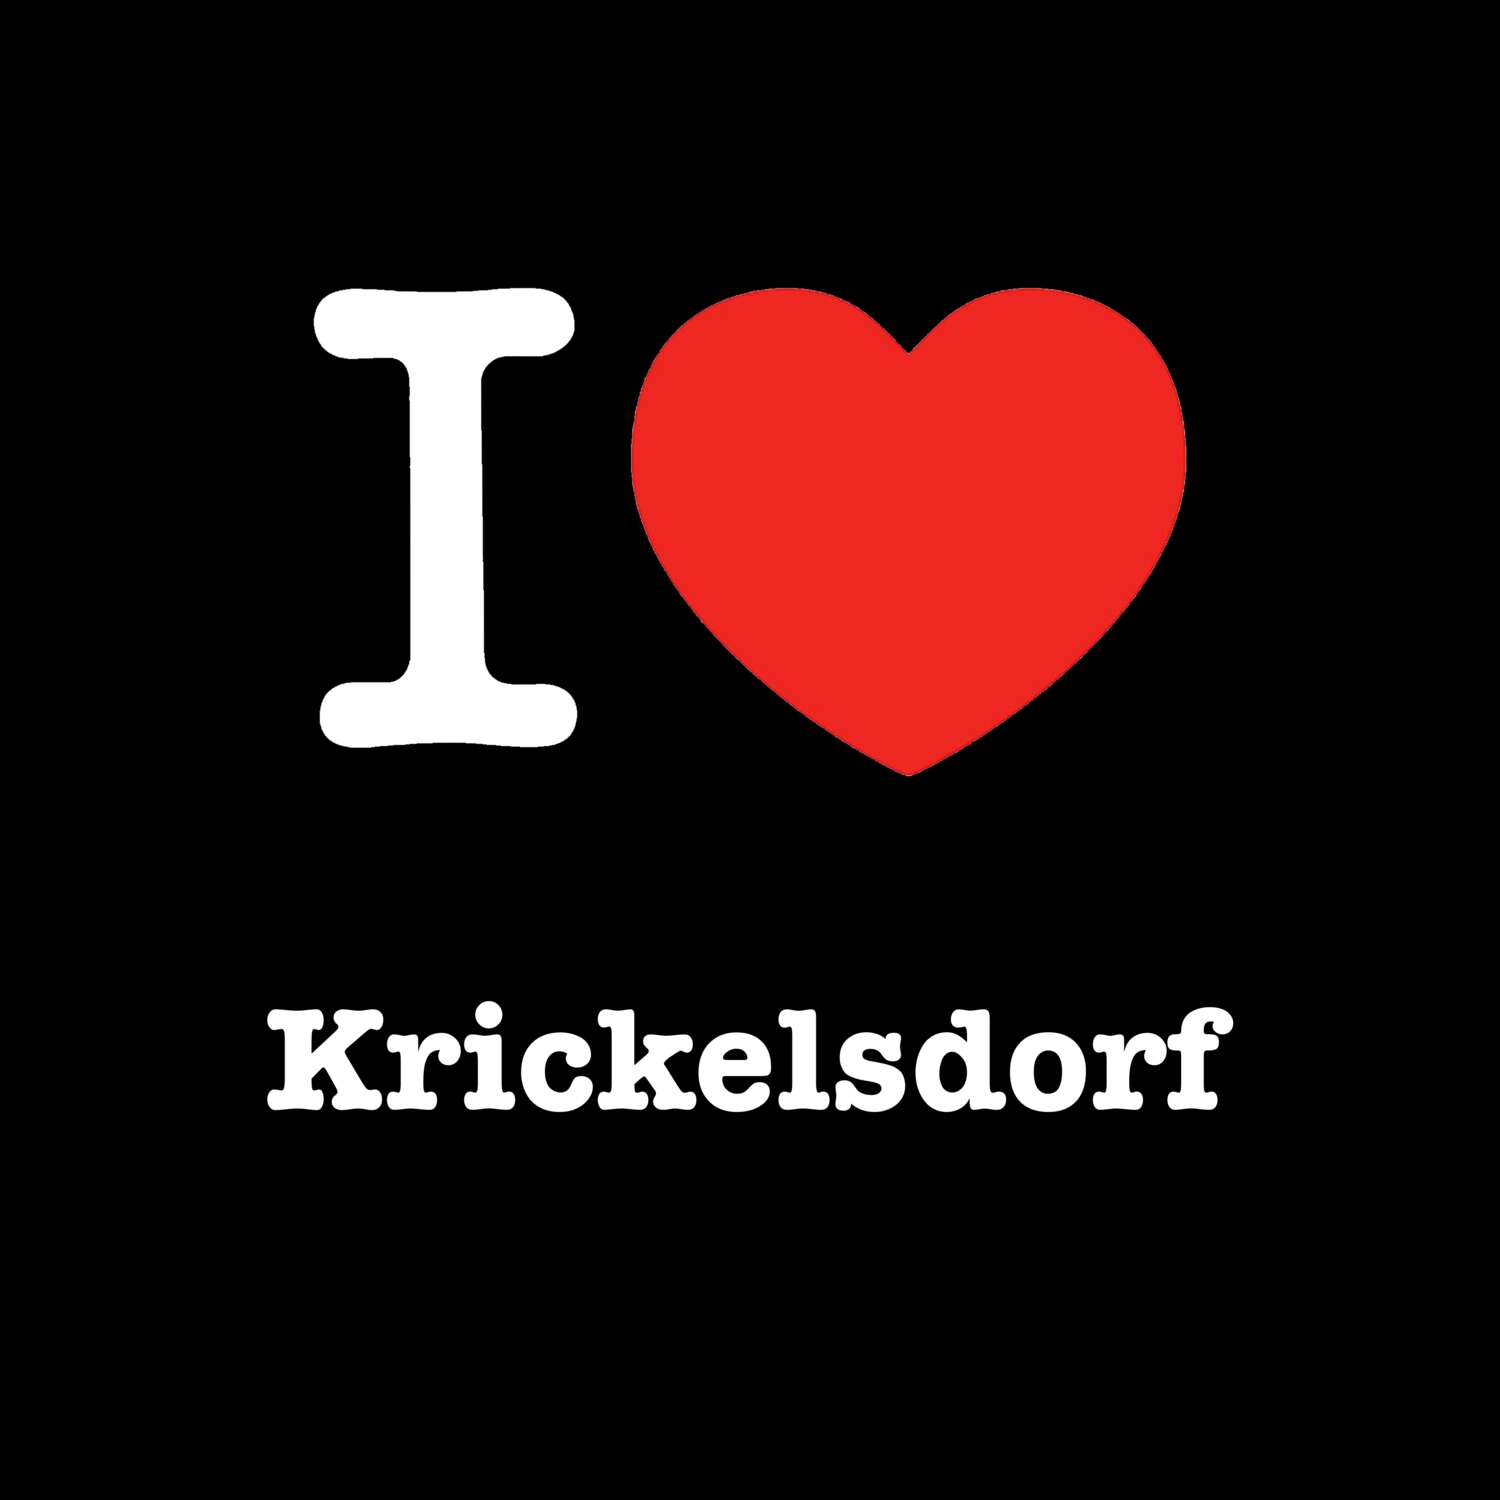 Krickelsdorf T-Shirt »I love«